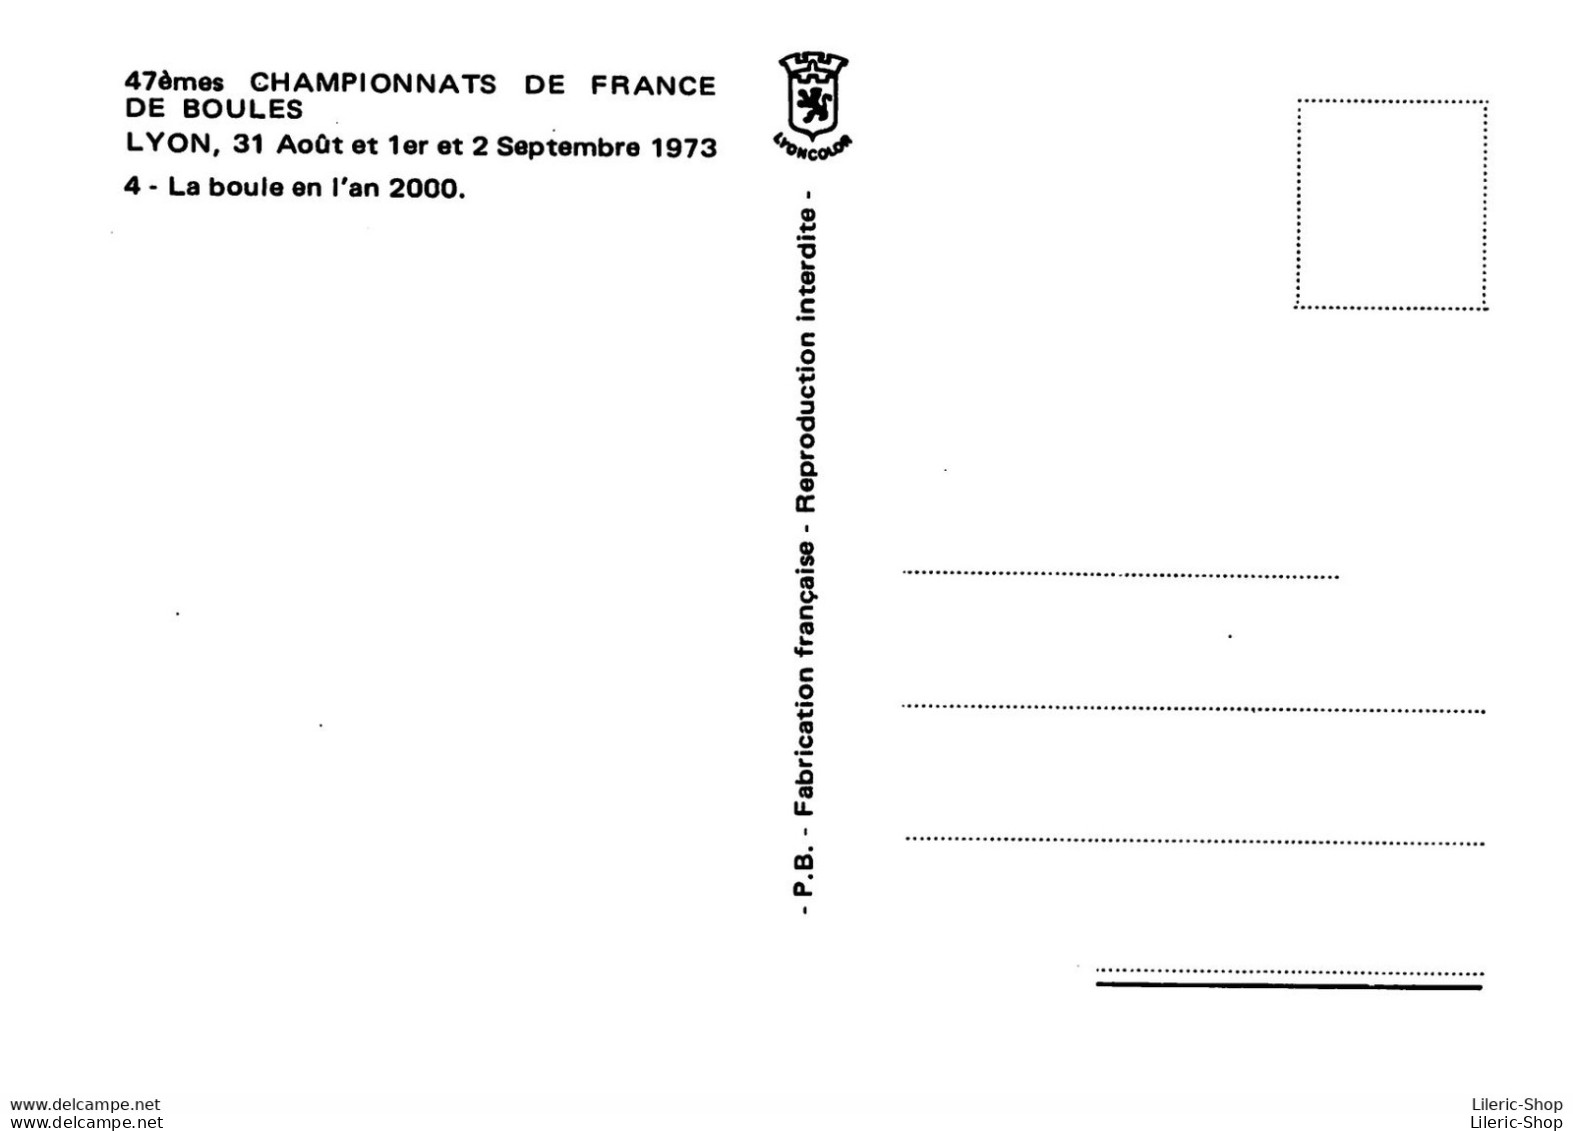 47 EMES CHAMPIONNAT DE FRANCE LYON AOUT 1973 LA BOULE DE L AN 2000 DESSIN ROGERSAM - Petanca